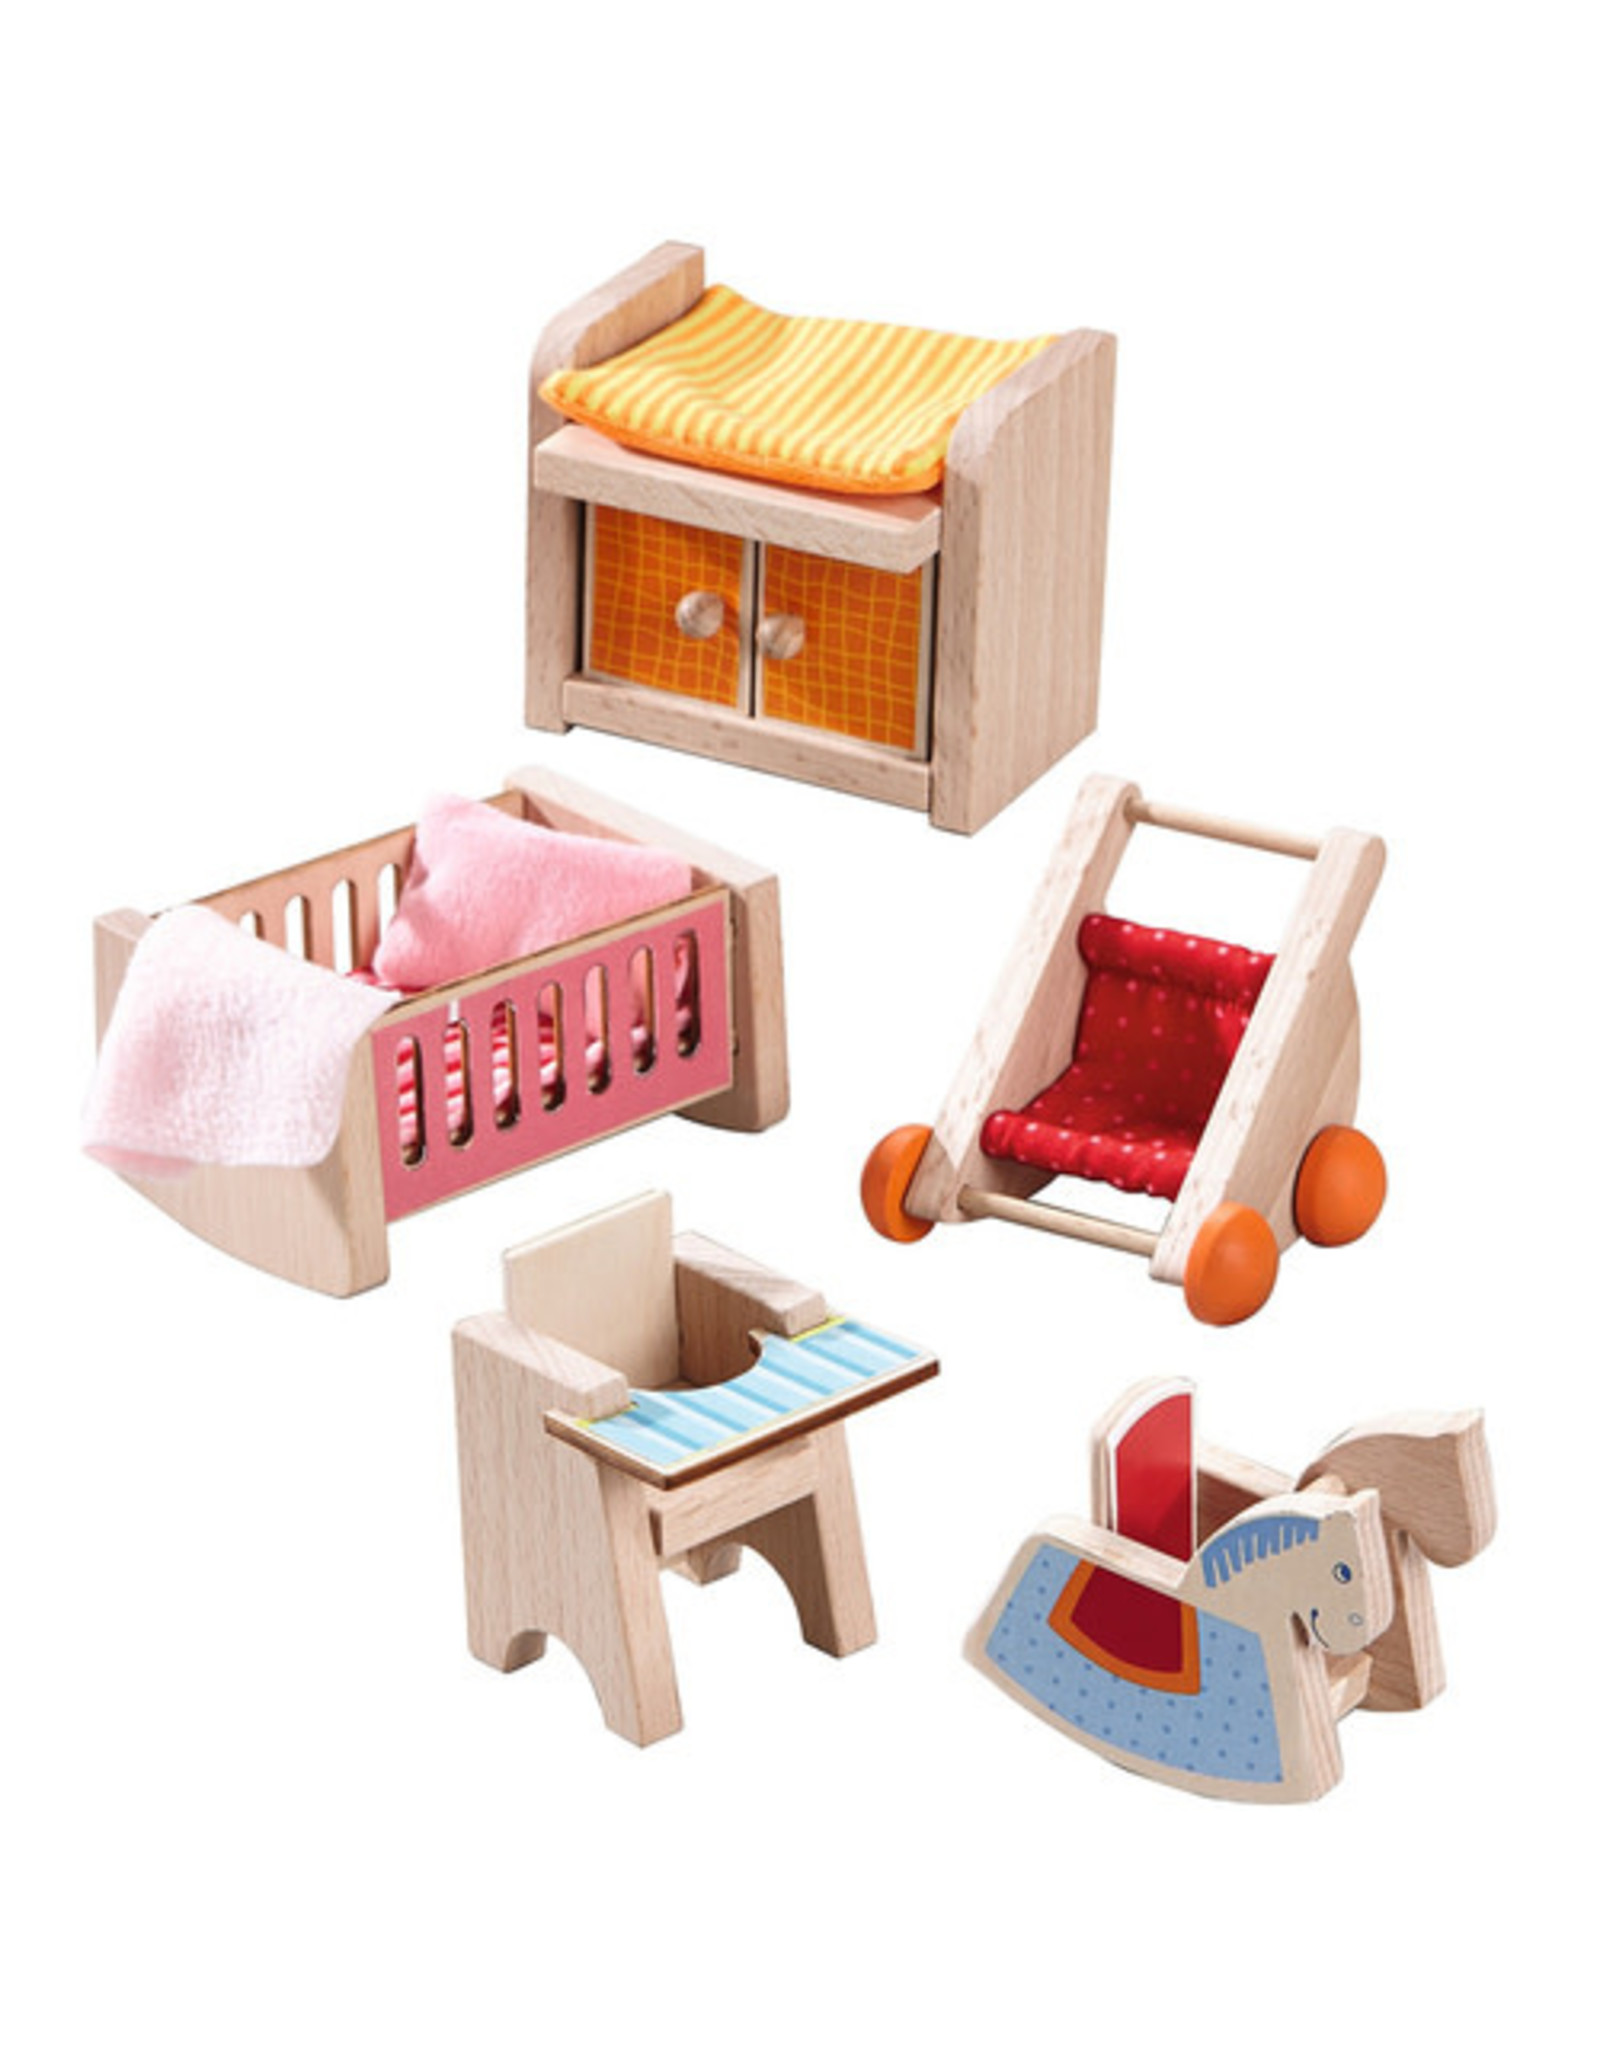 Children's Room Furniture